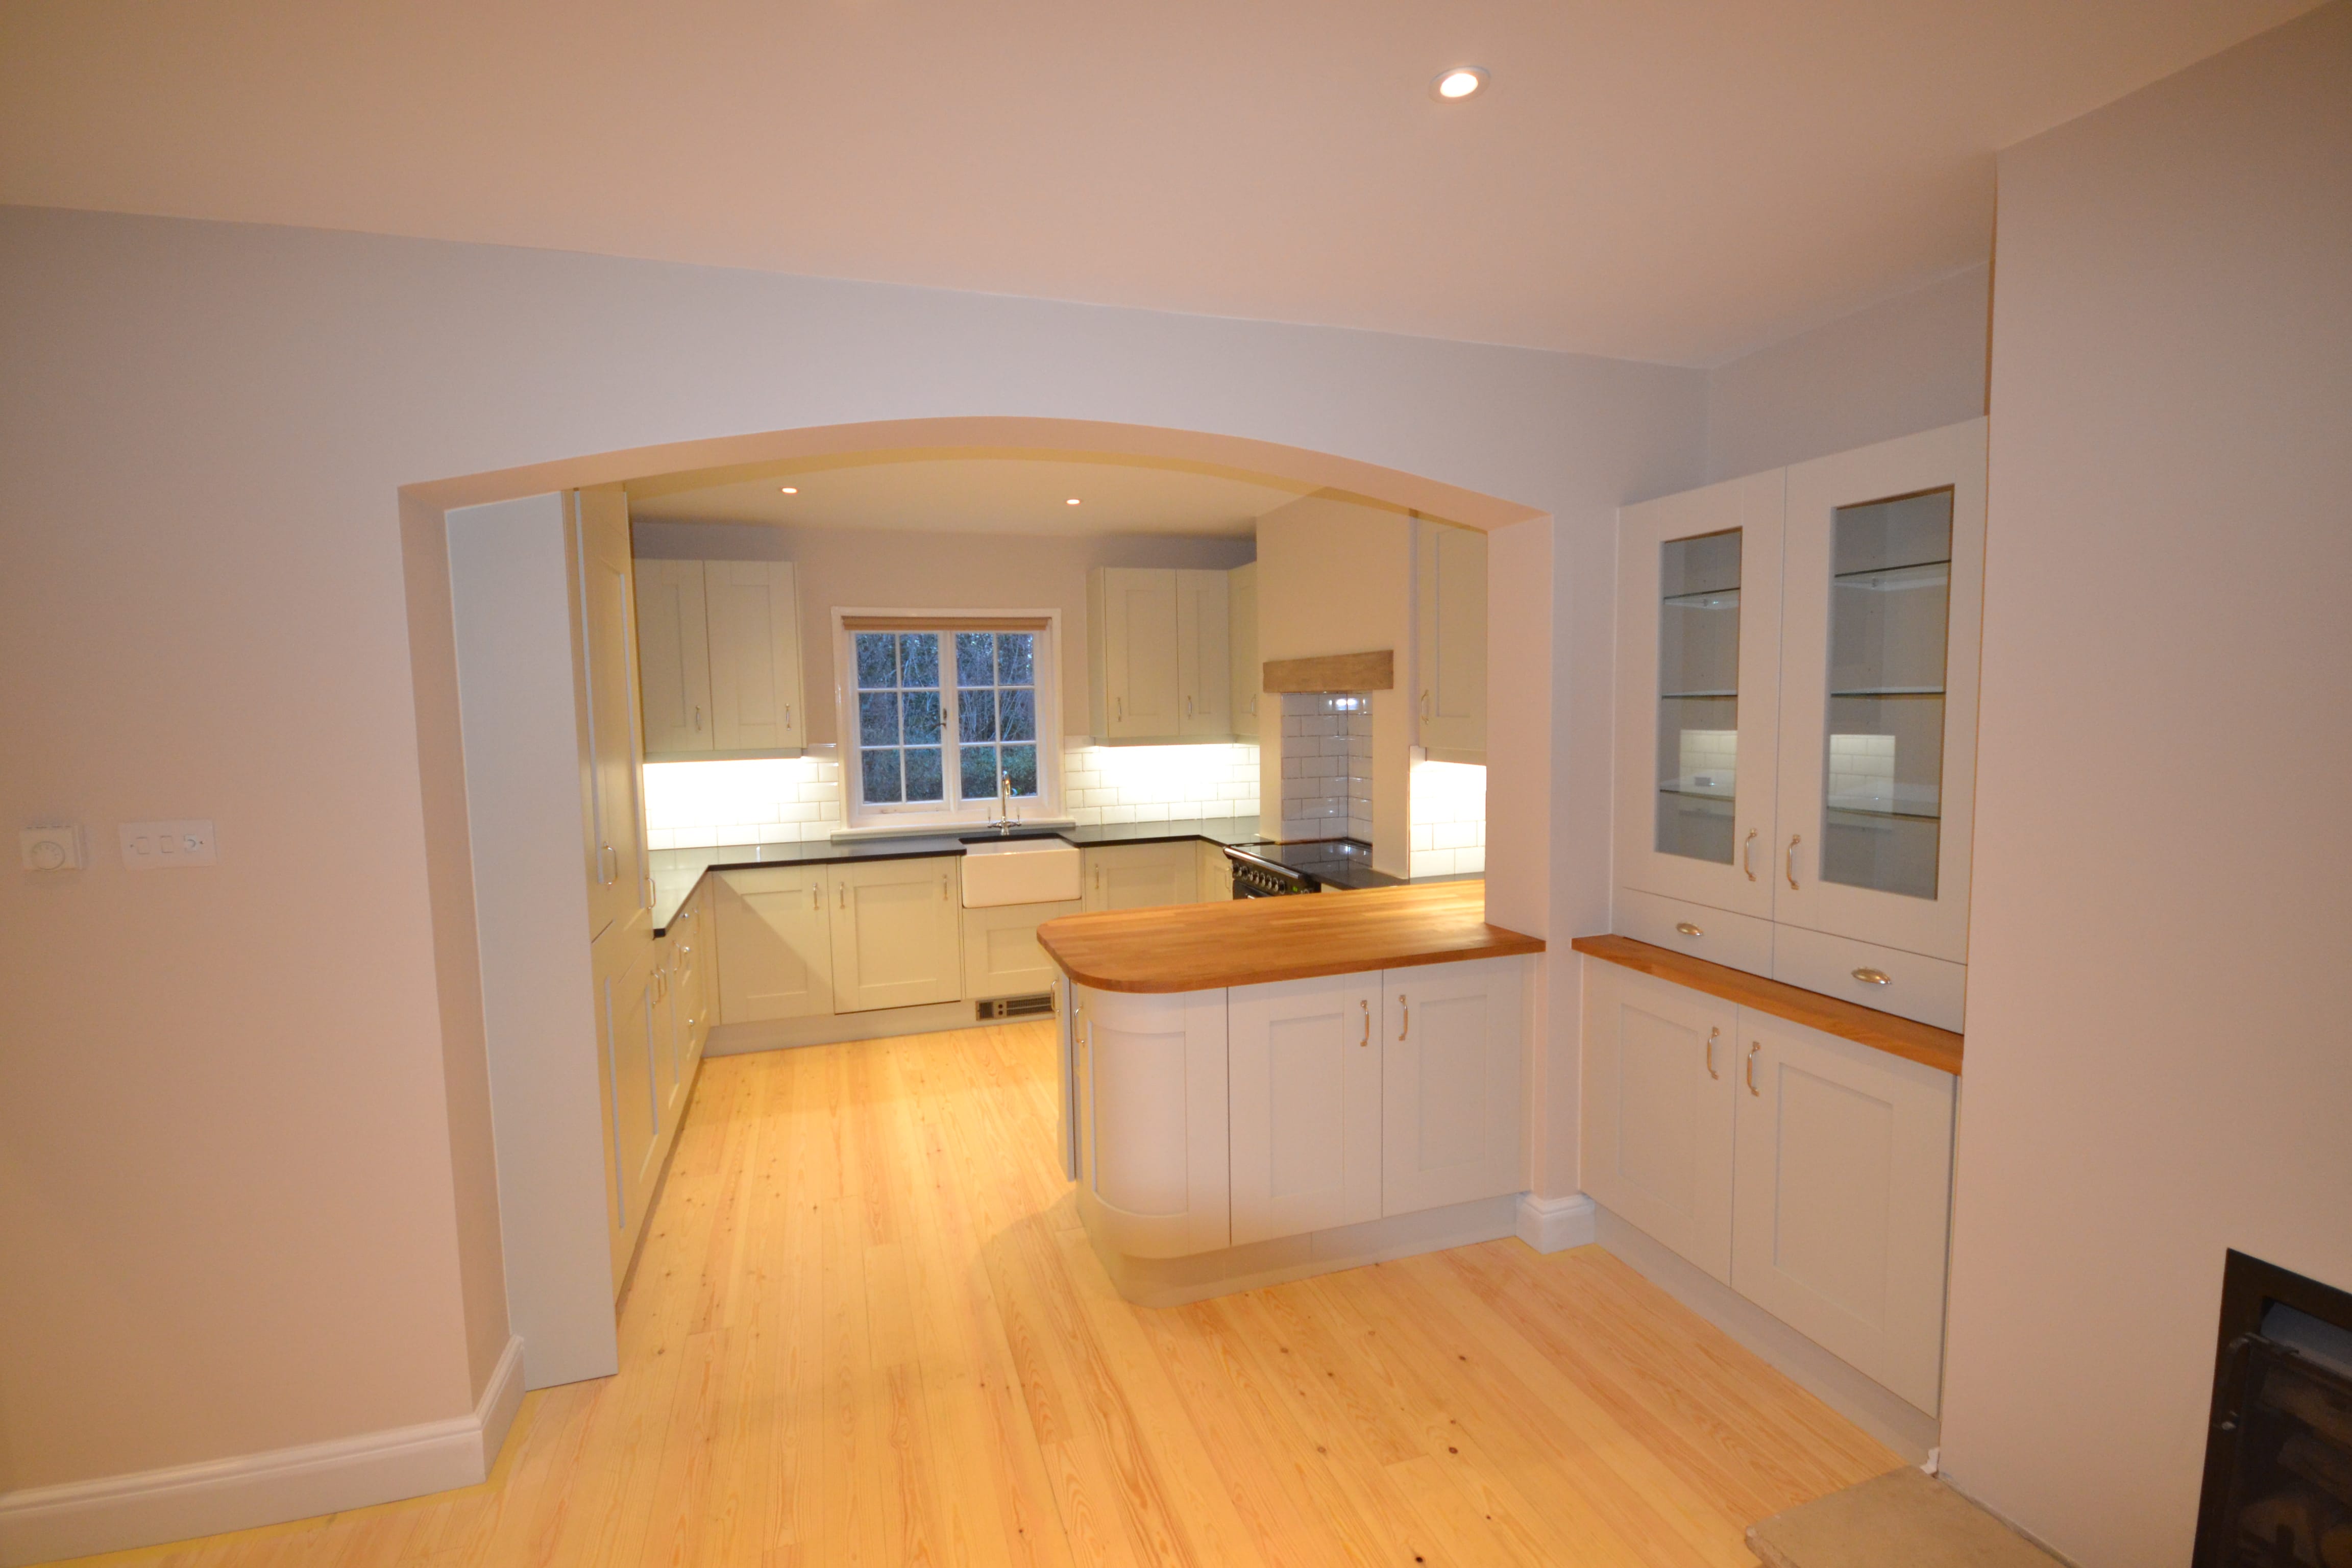 fitted kitchen design pdf